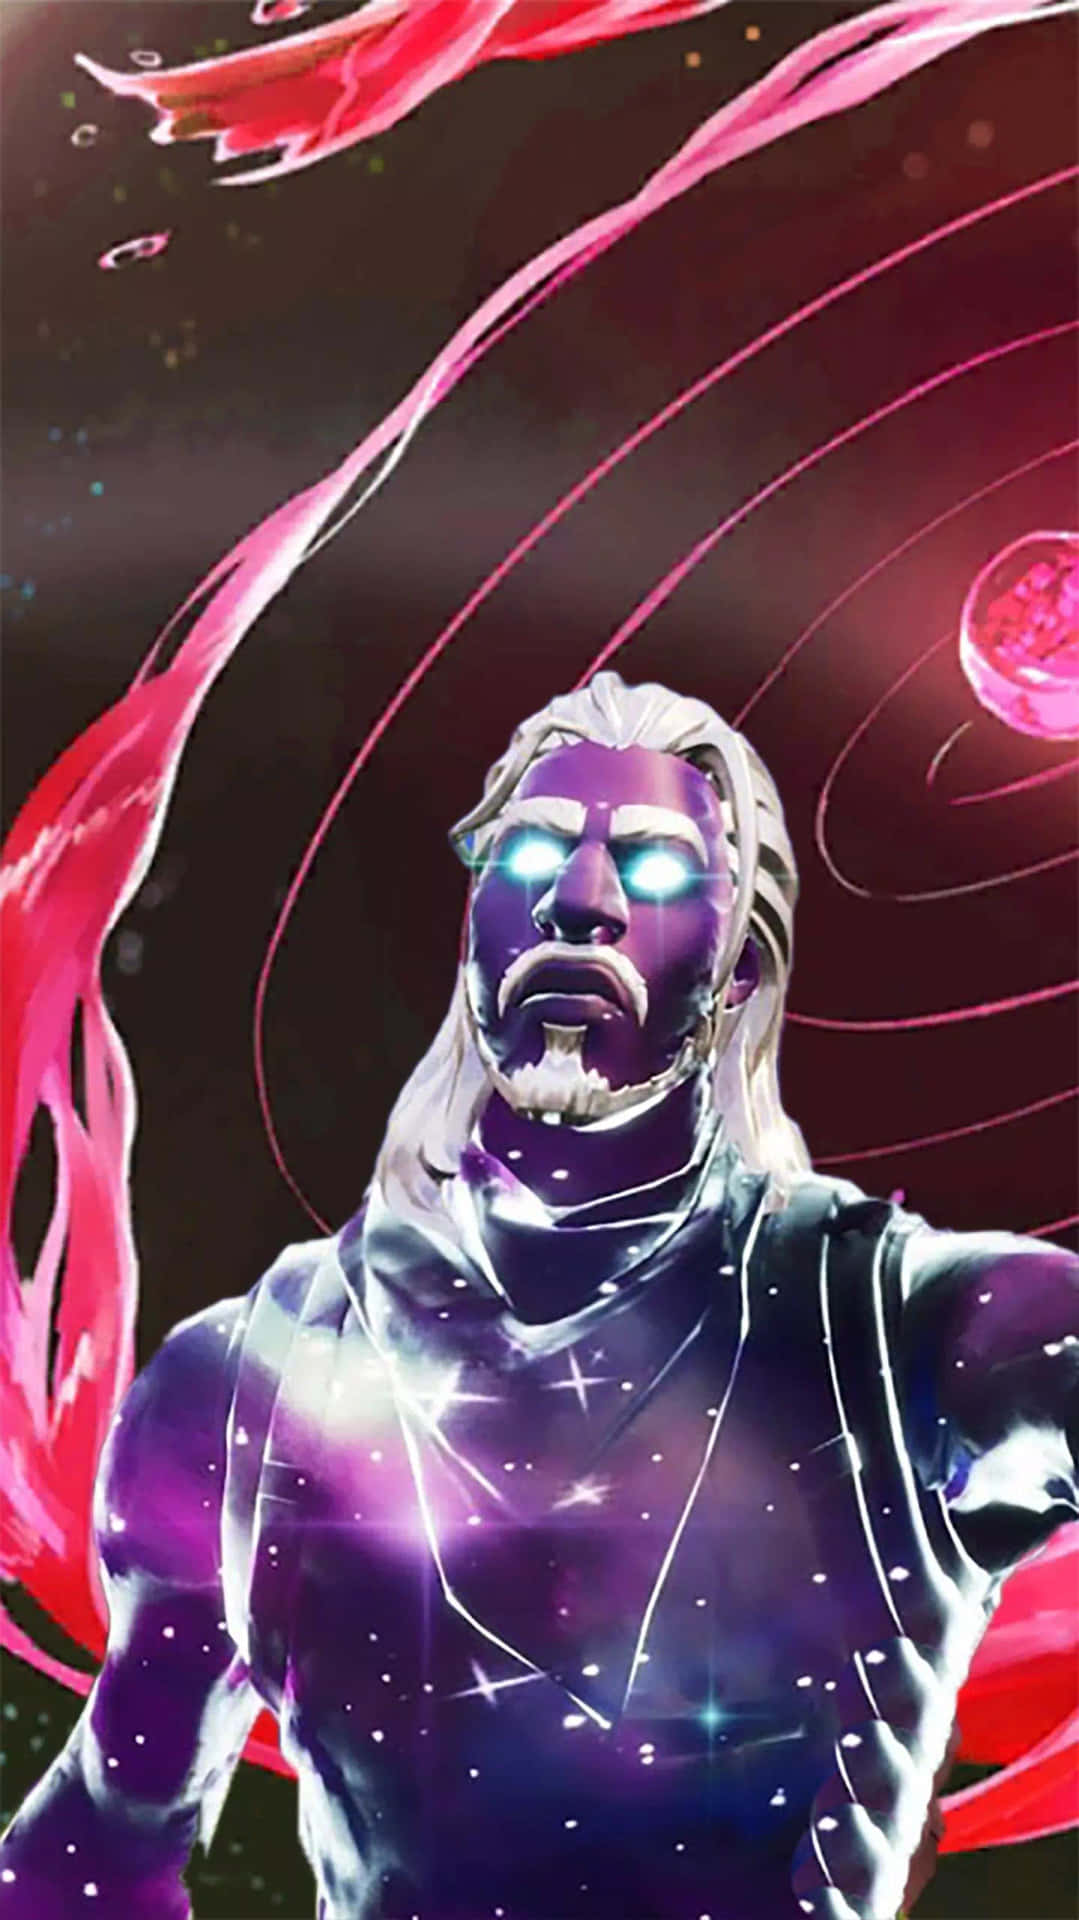 Delve into an Intergalactic Adventure in Epic Games' Fortnite Galaxy Wallpaper